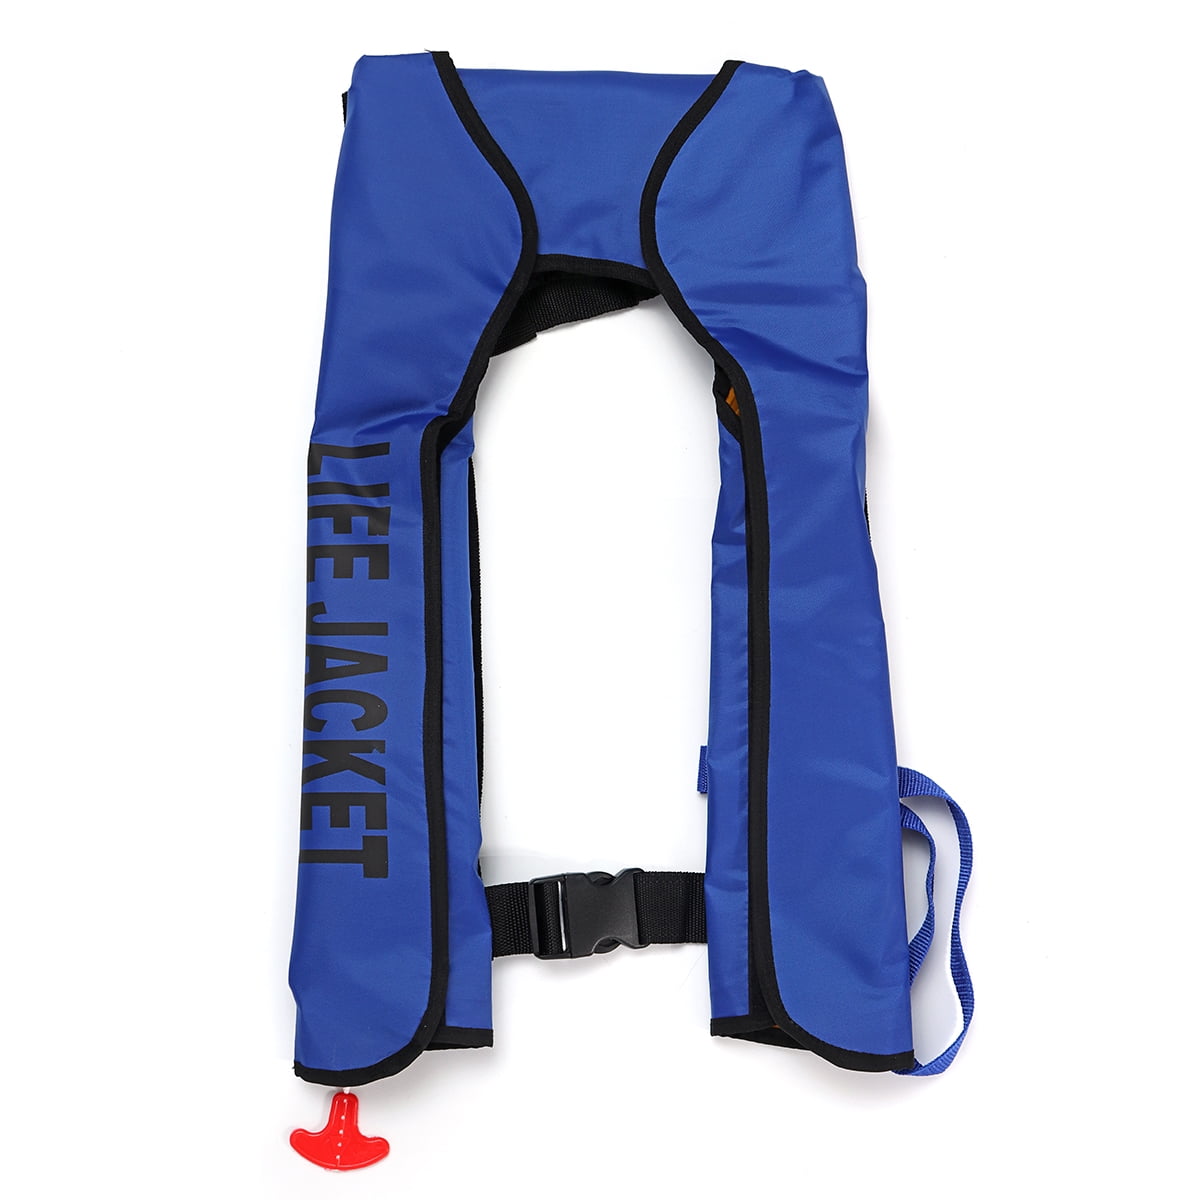 UK Adult Manual/Automatic Inflatable Life Jacket Inflation150N PFD Survival Vest 